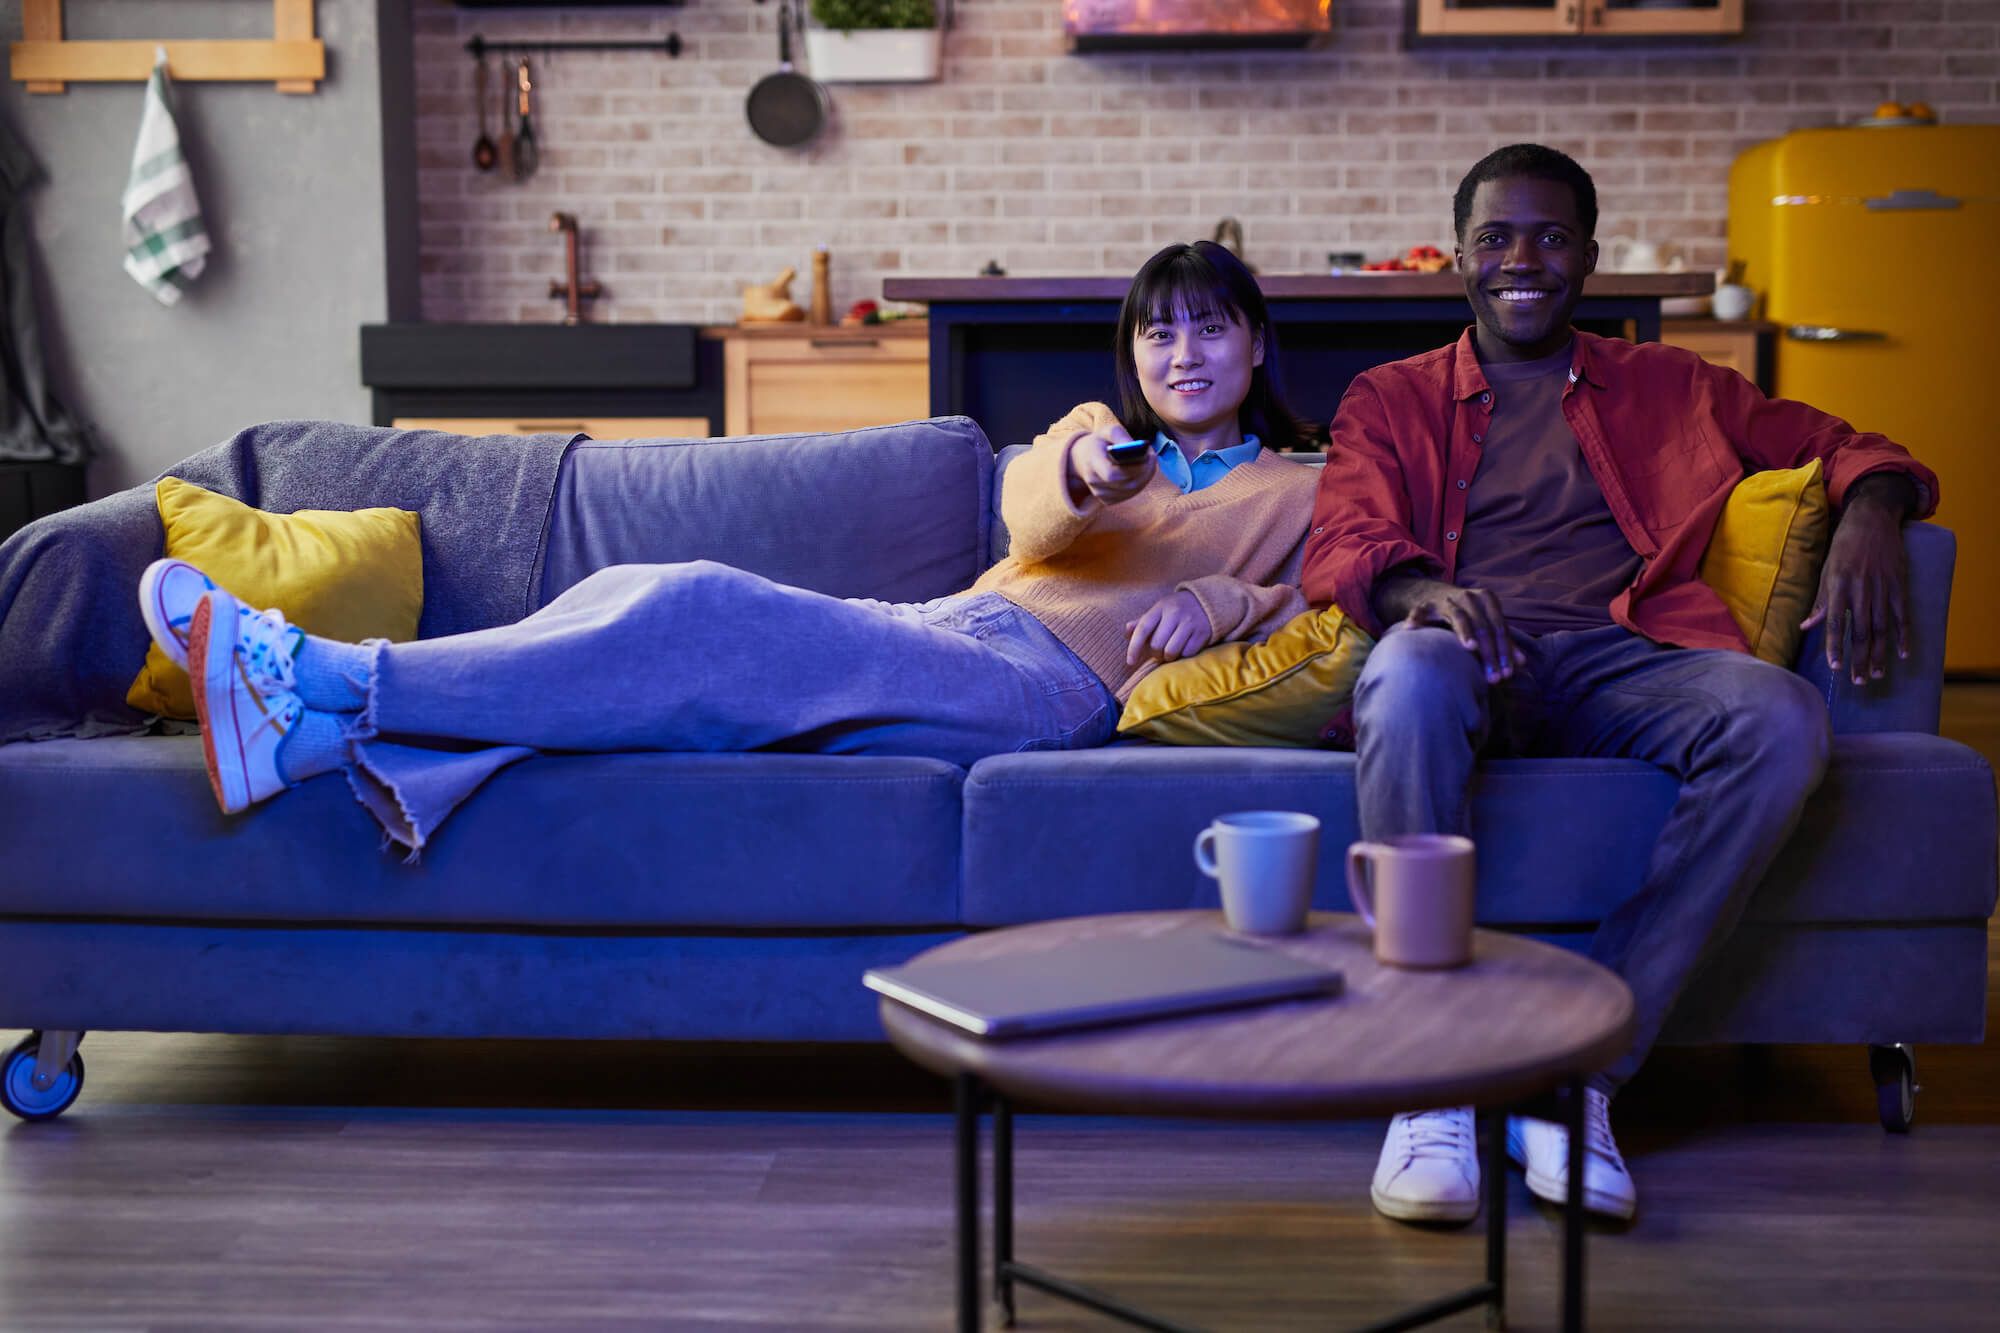 A couple ready to binge watch an entire season on Netflix